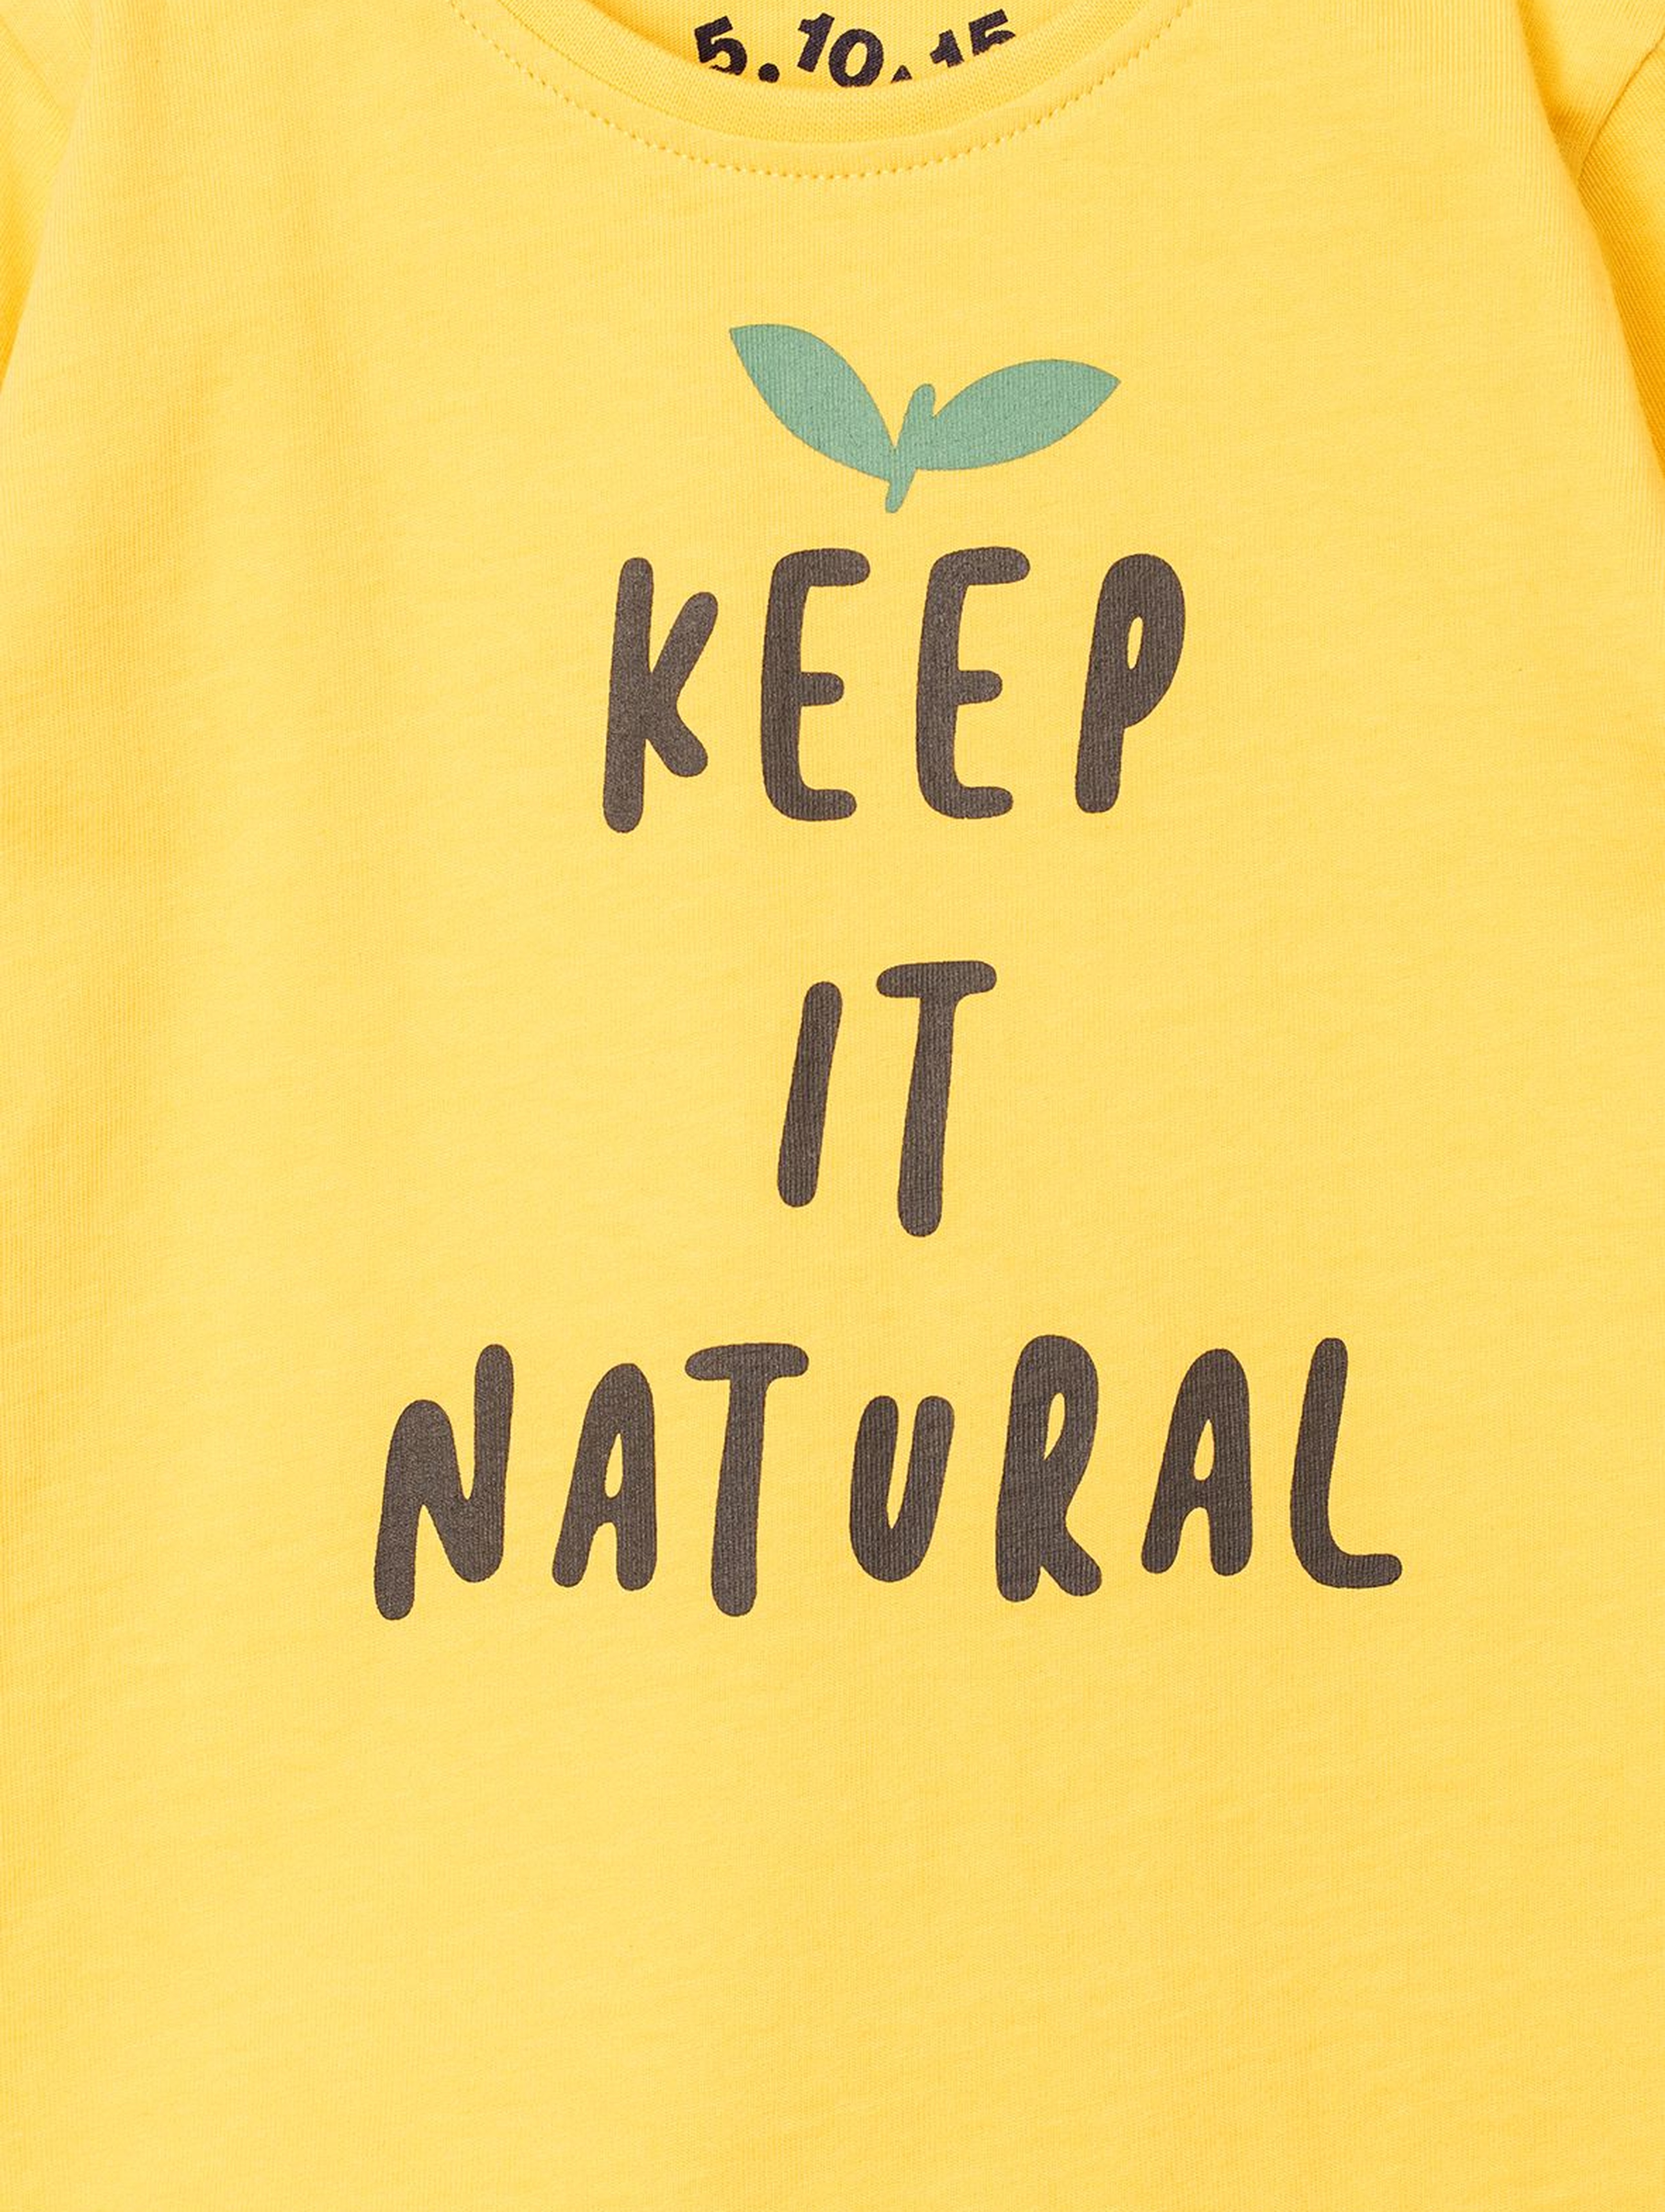 Bluzka niemowlęca żółta z napisem- Keep in natural